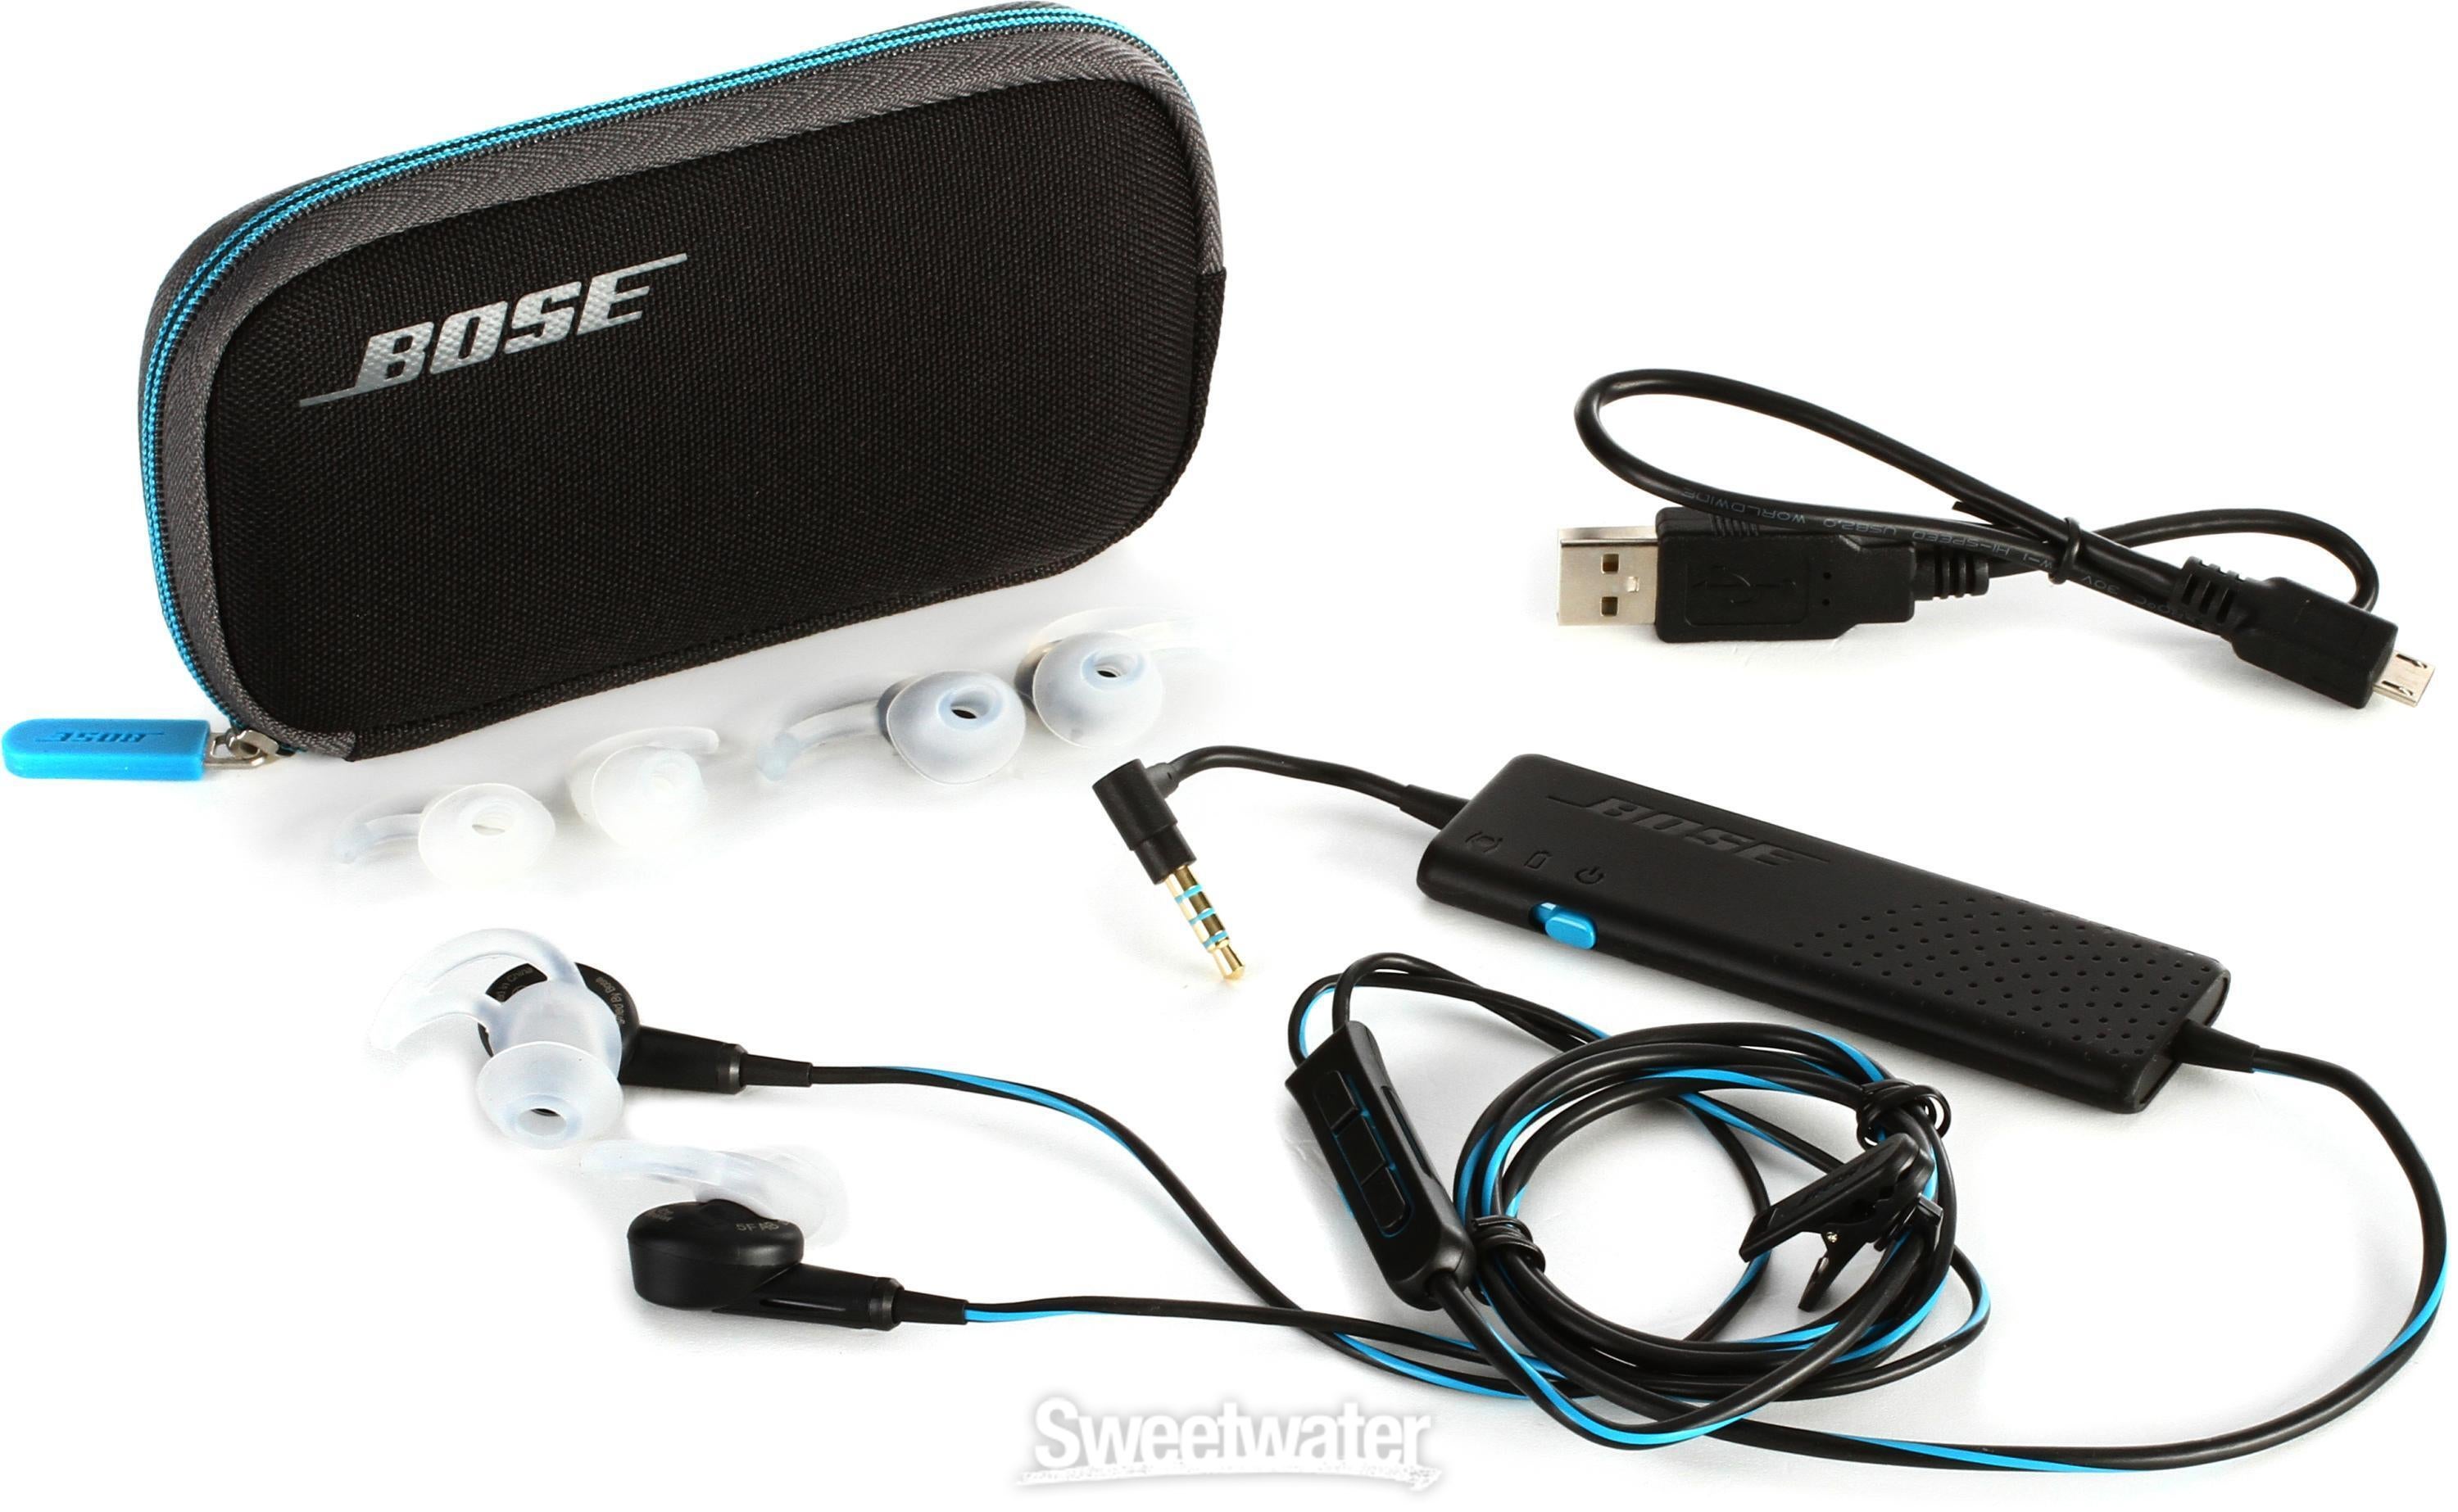 Bose QuietComfort 20 ANC Earphones for Apple Devices - Black 